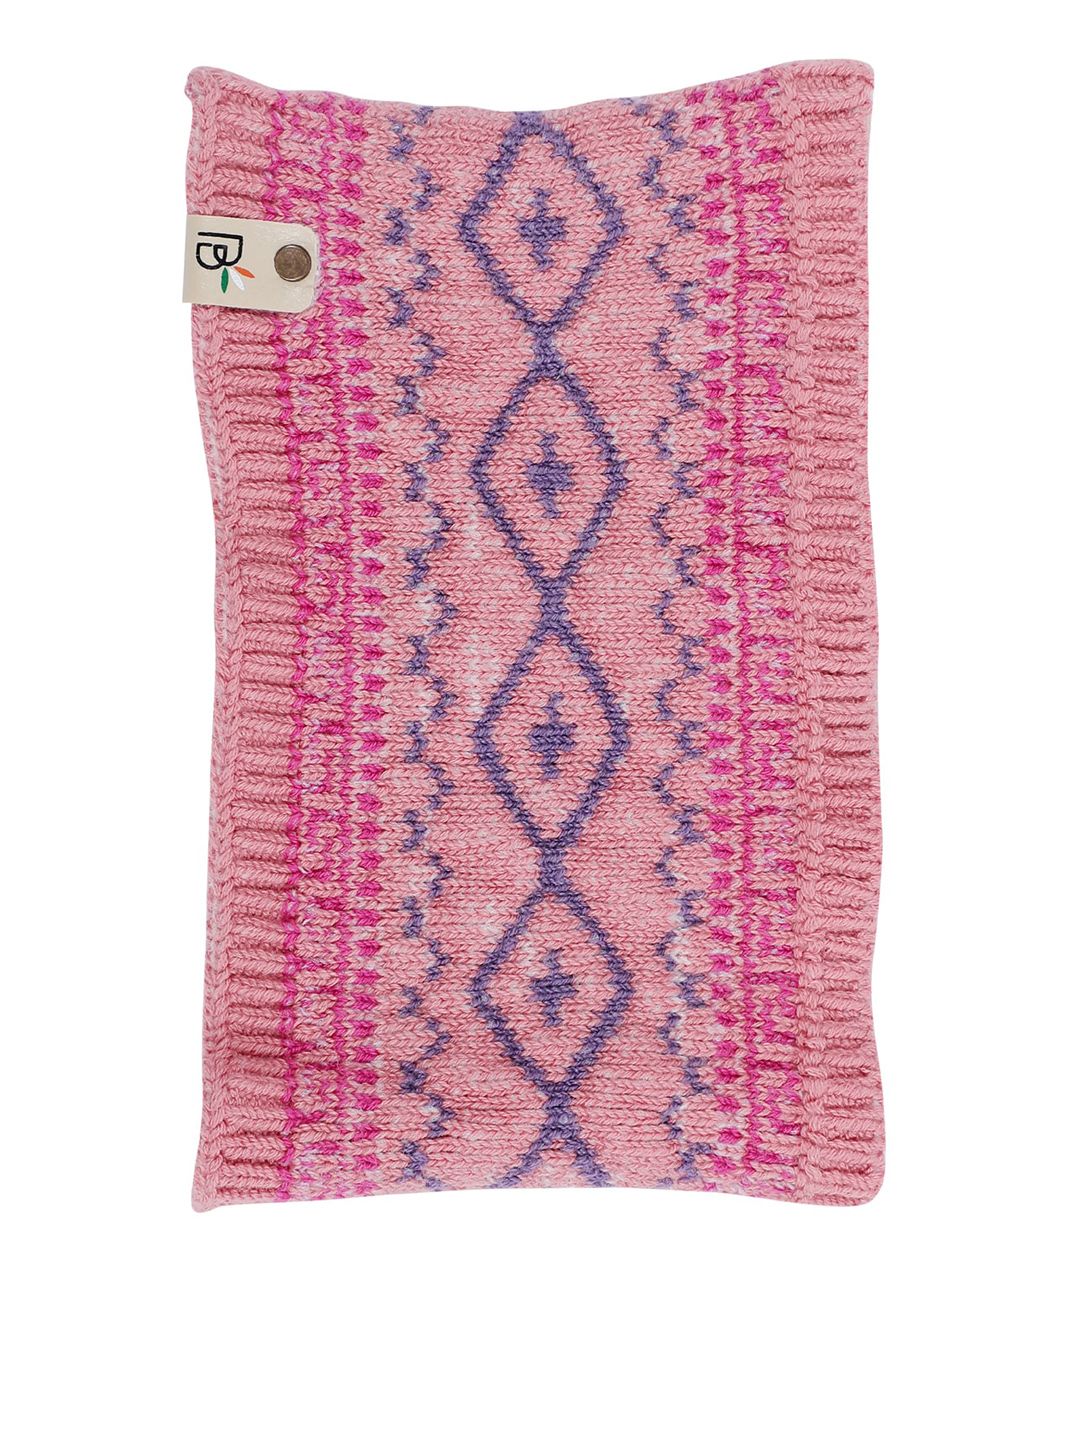 Bharatasya Unisex Pink Cotton Sports Sweatband Price in India